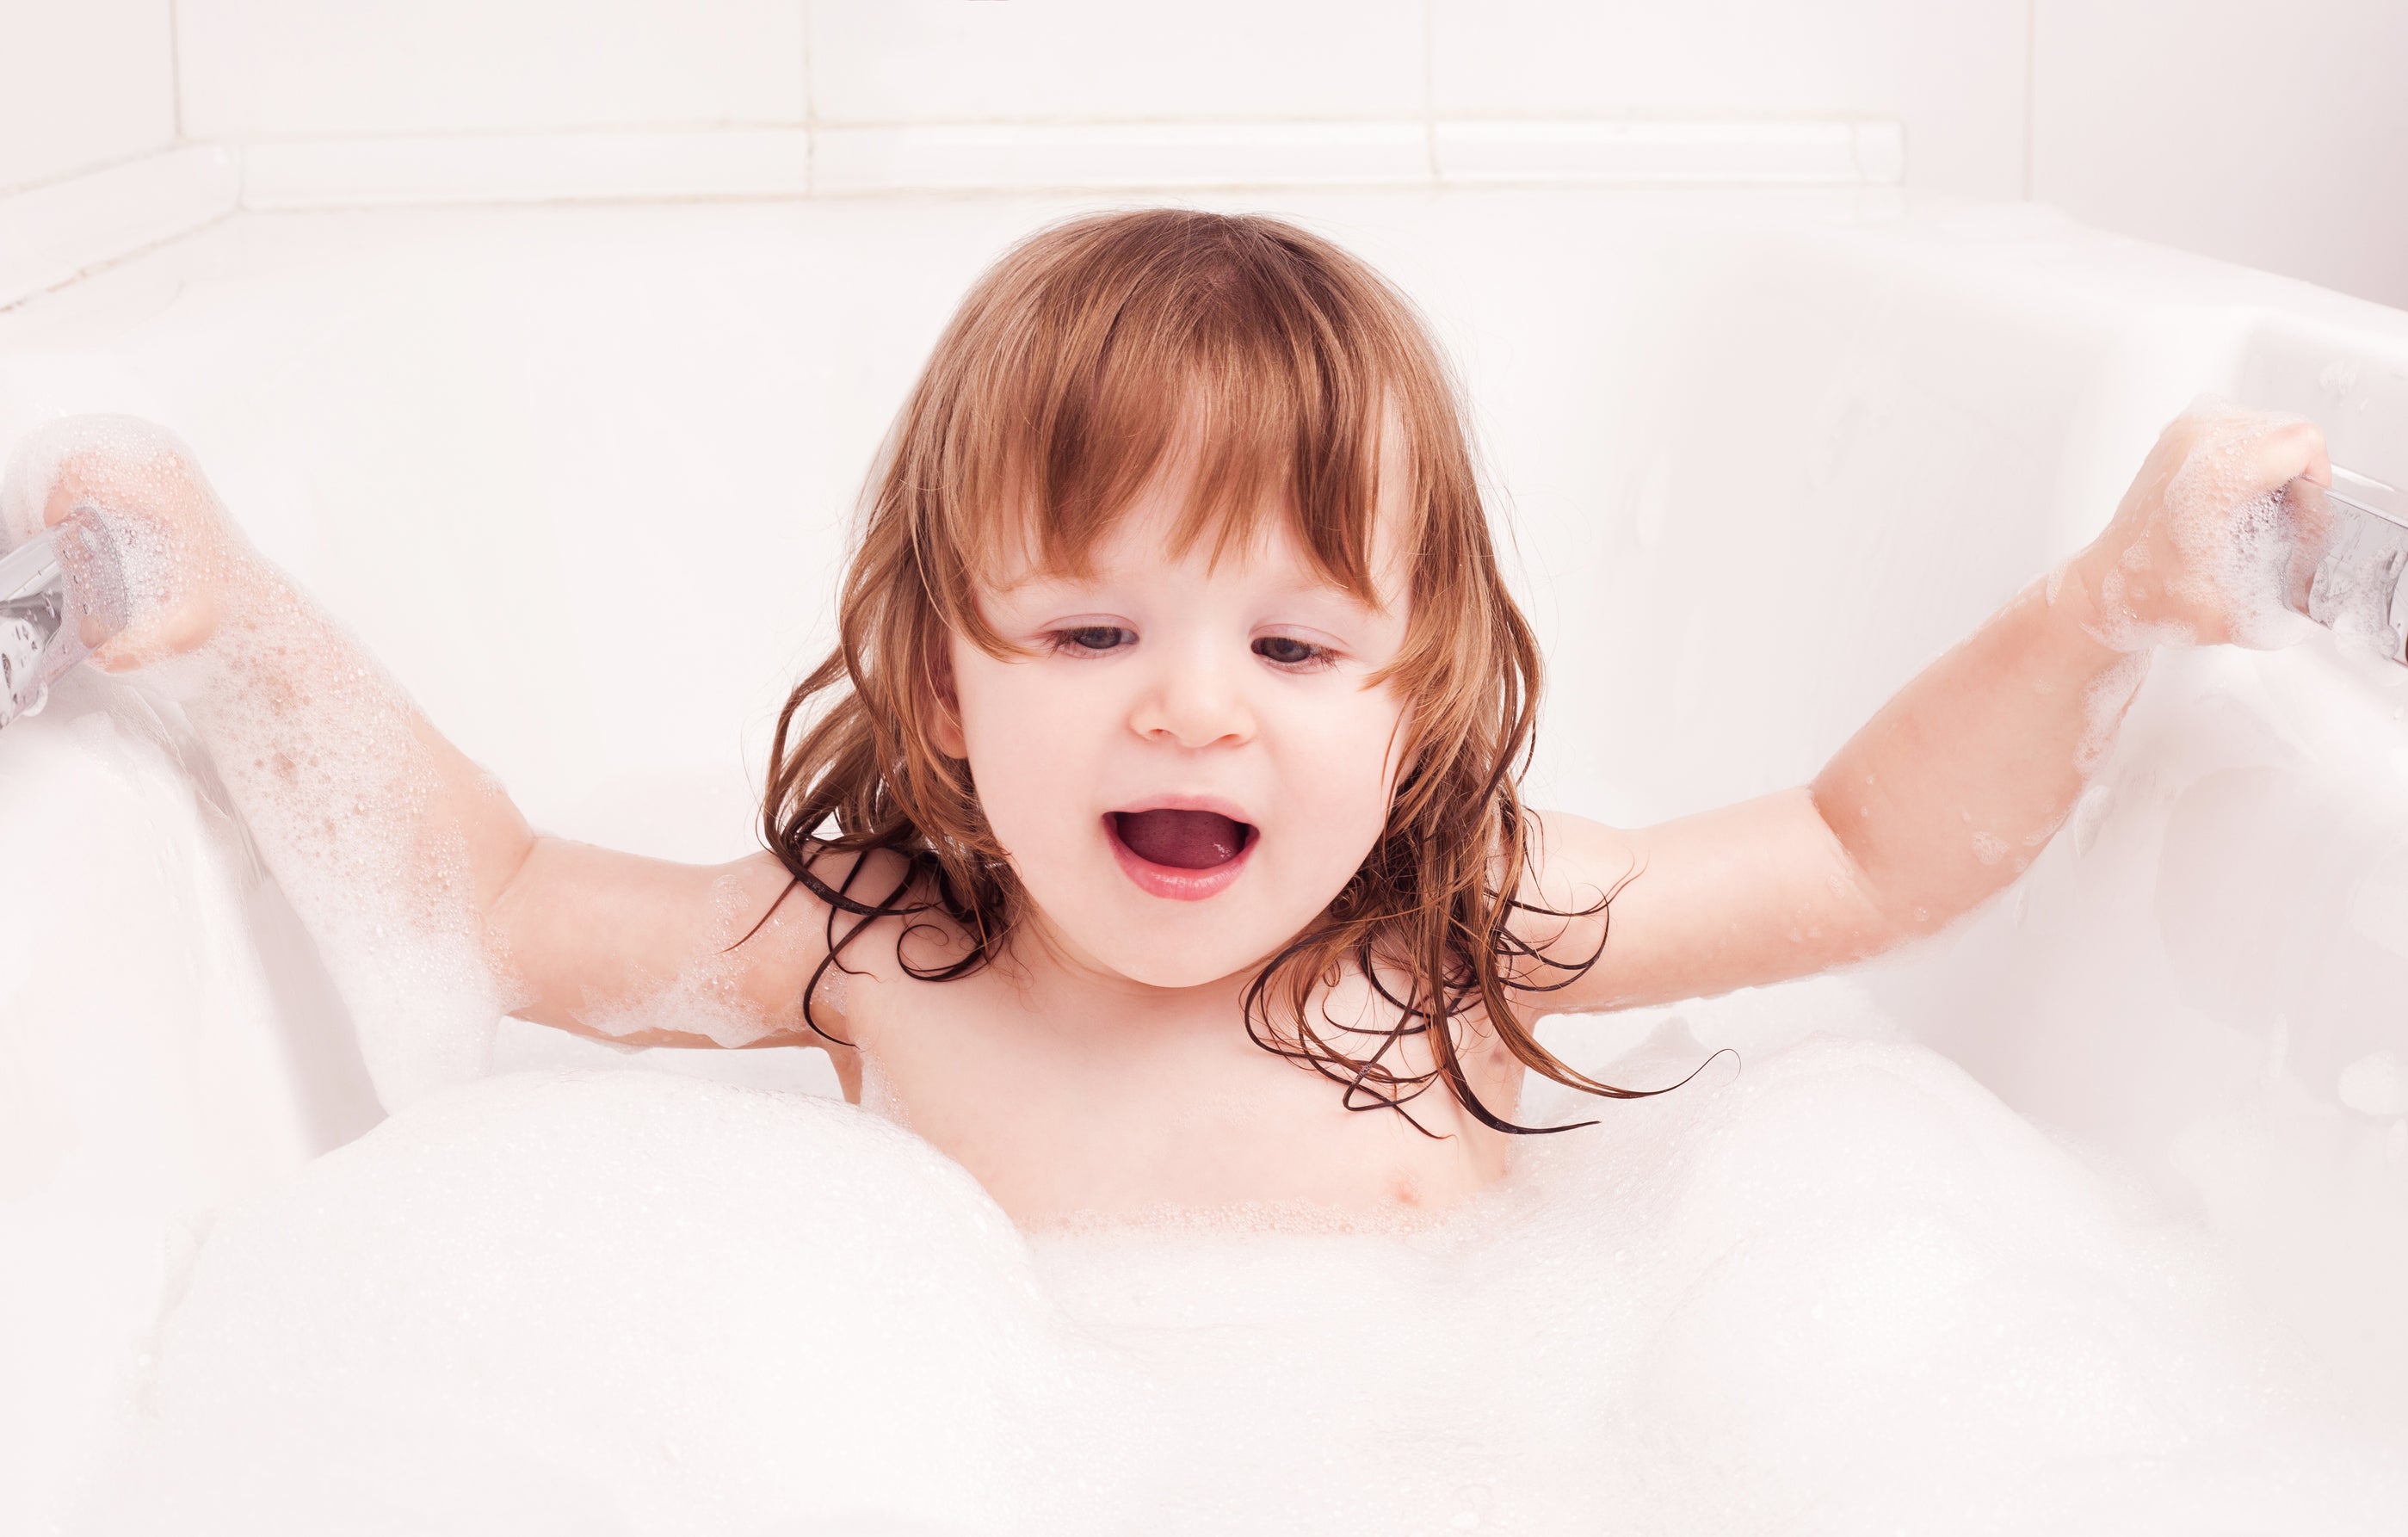 A toddler girl with long hair takes a bubble bath